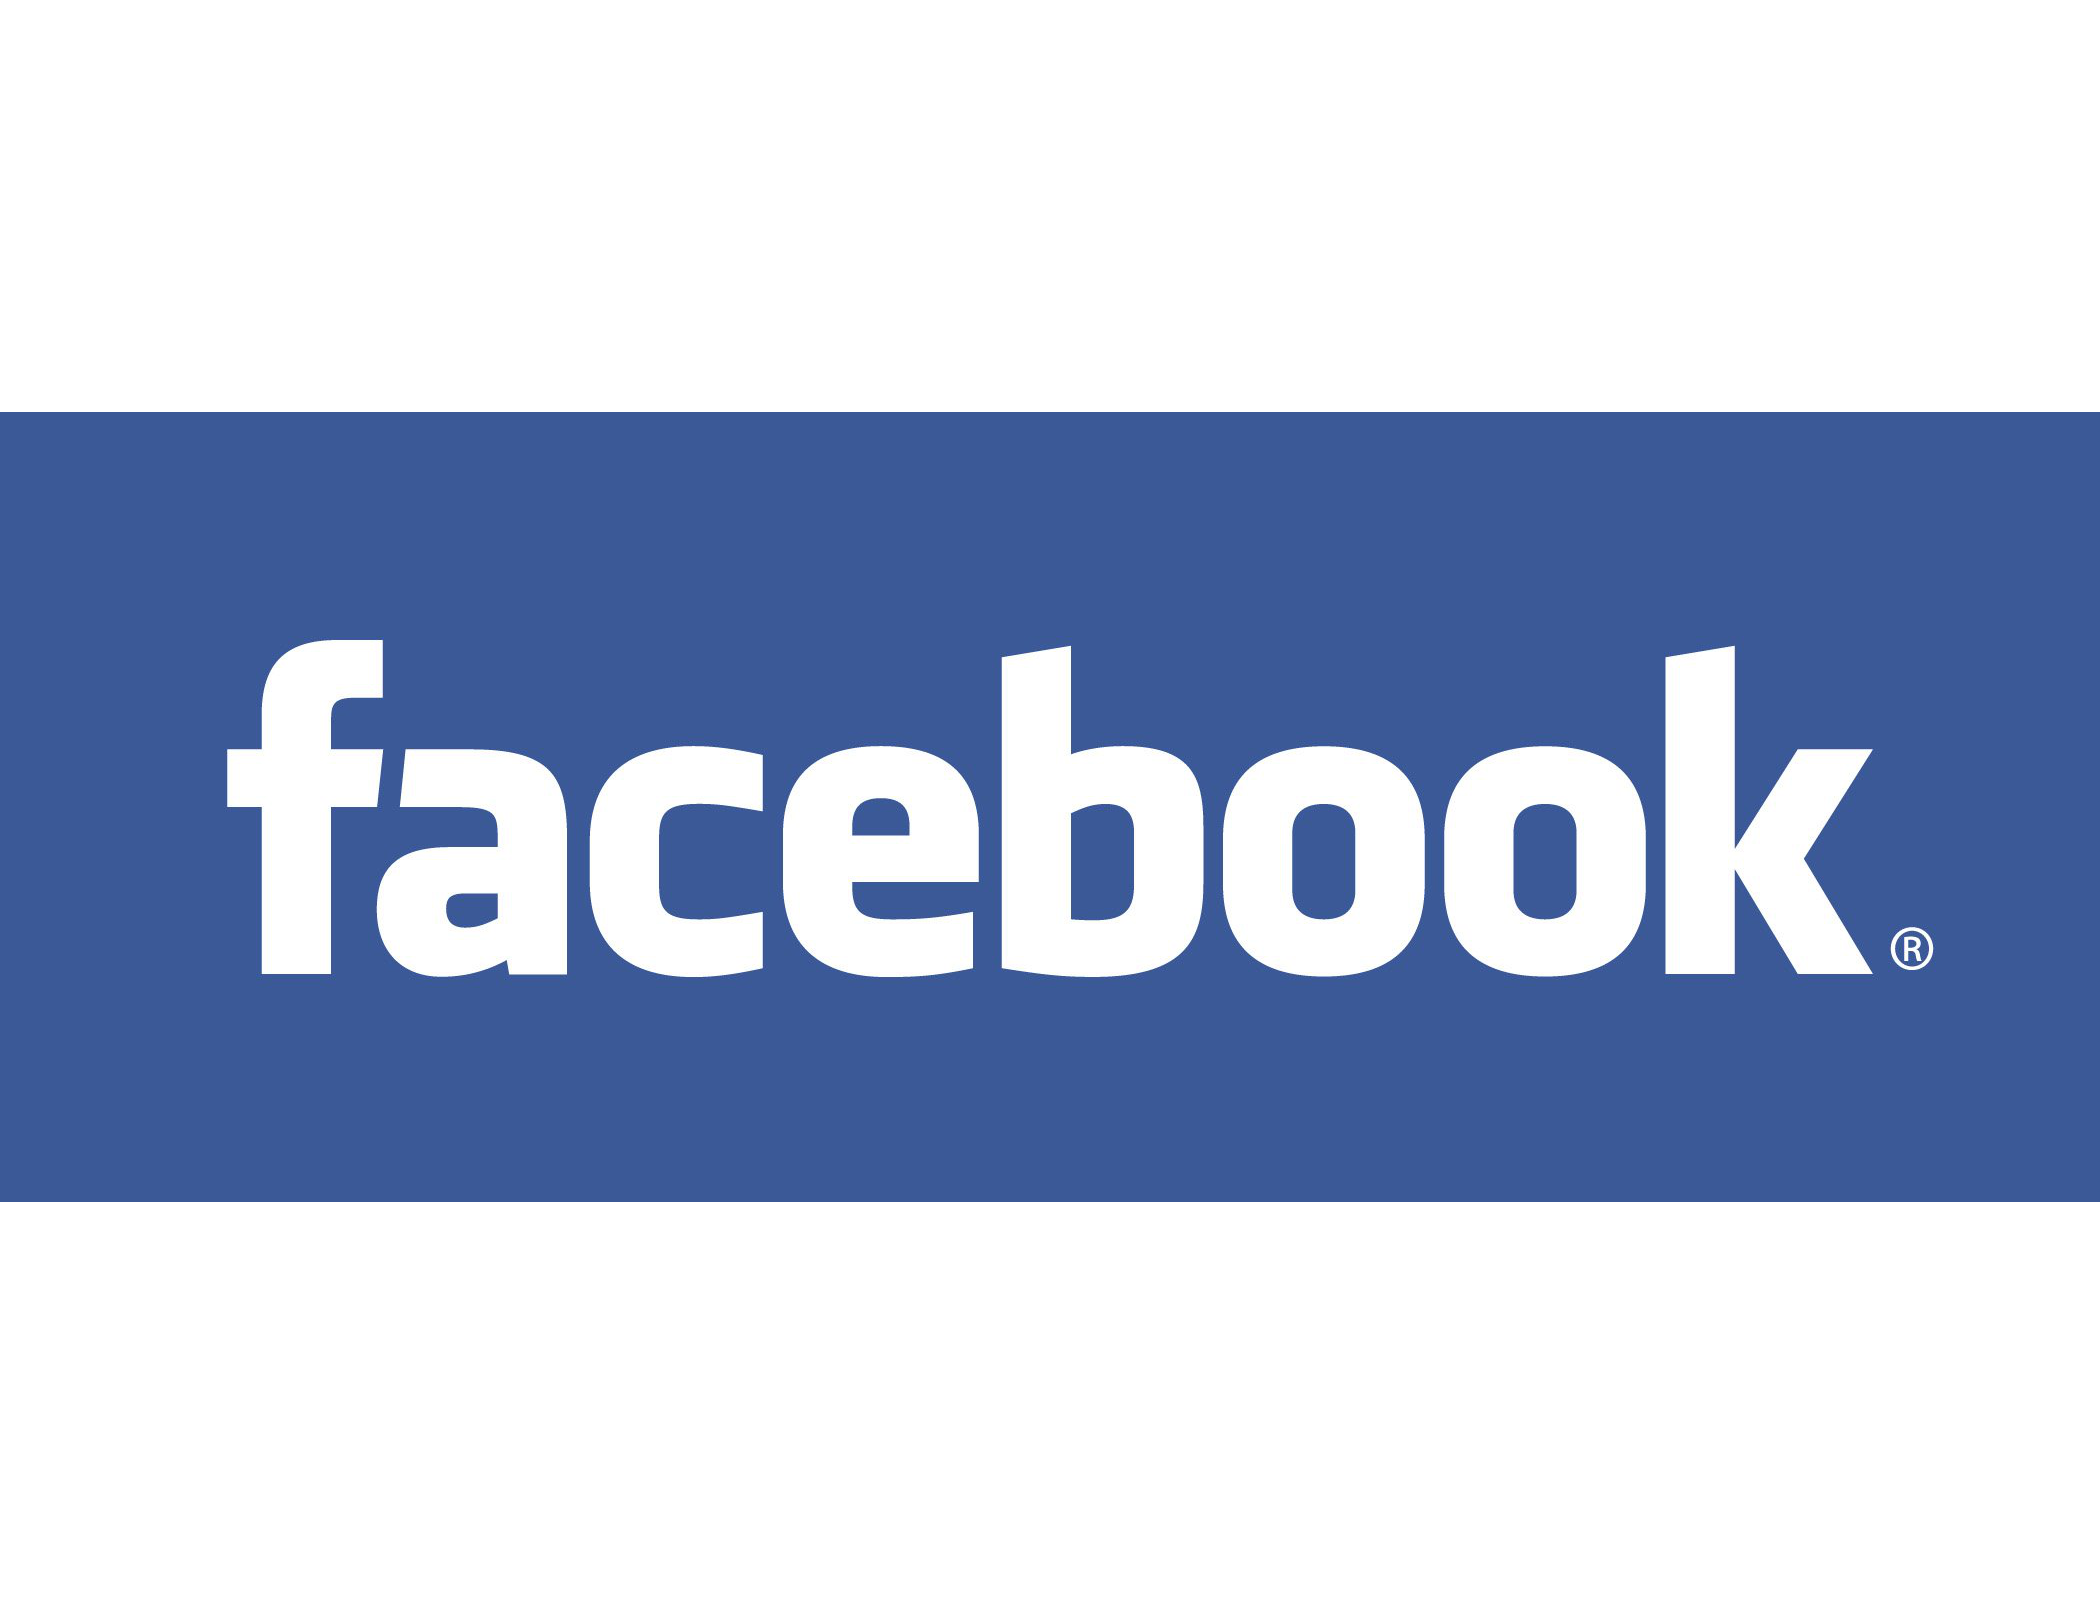 facebook-logo-291 (1).png